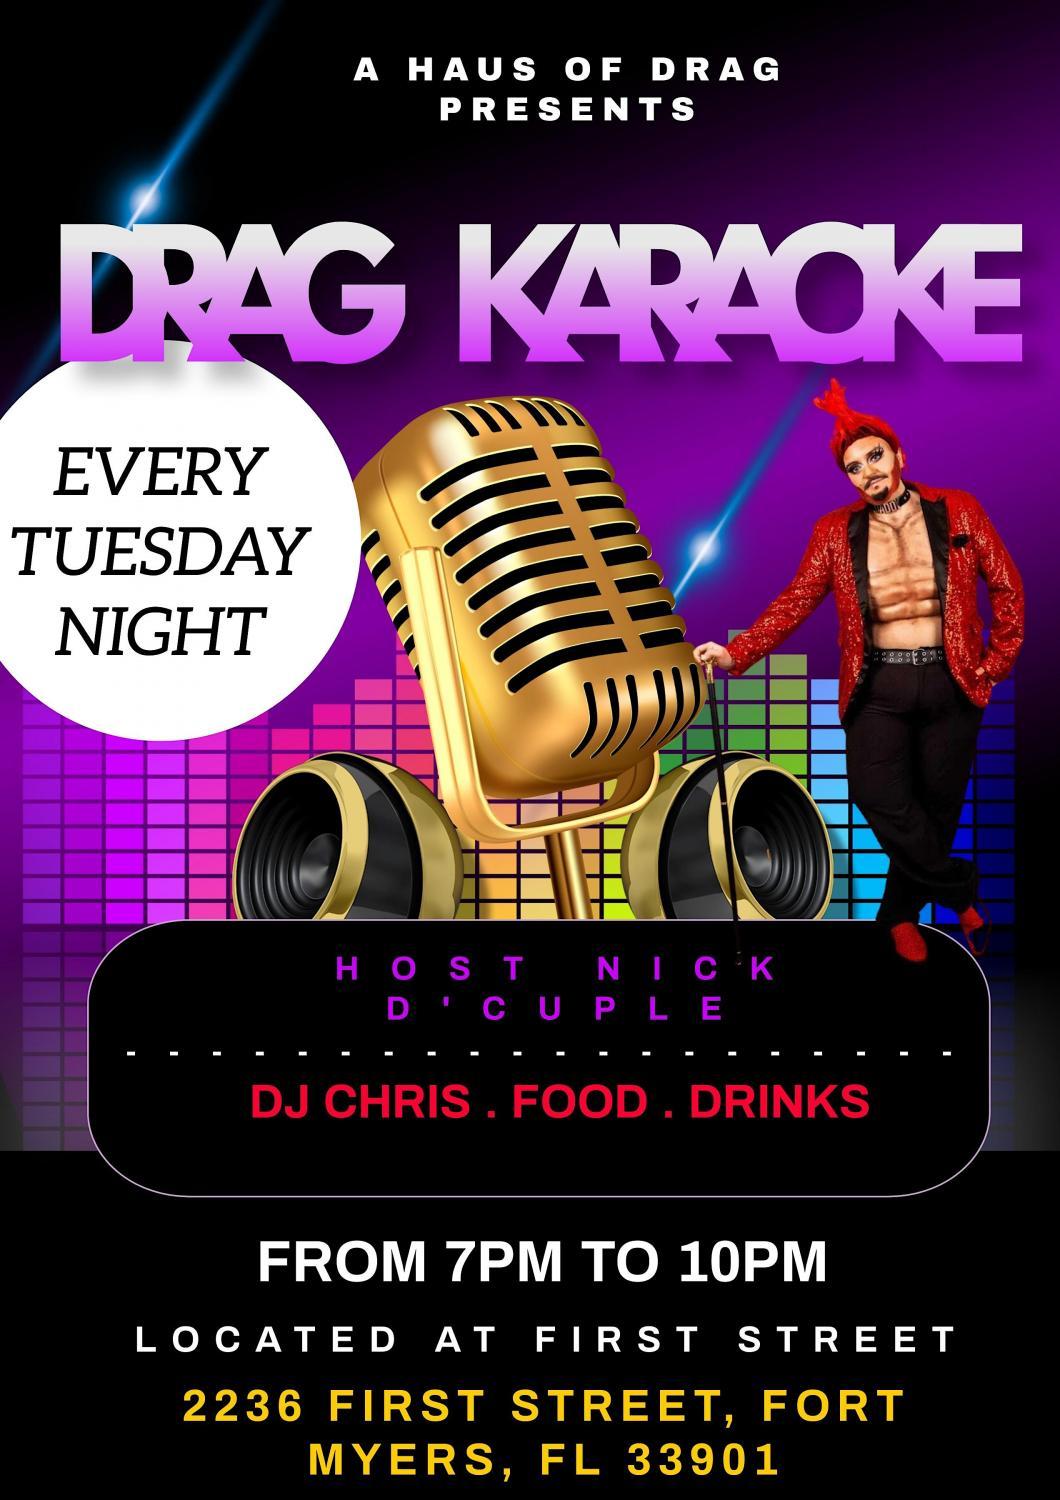 Drag Karaoke @ First Street!
Tue Dec 13, 7:00 PM - Tue Dec 13, 10:00 PM
in 53 days